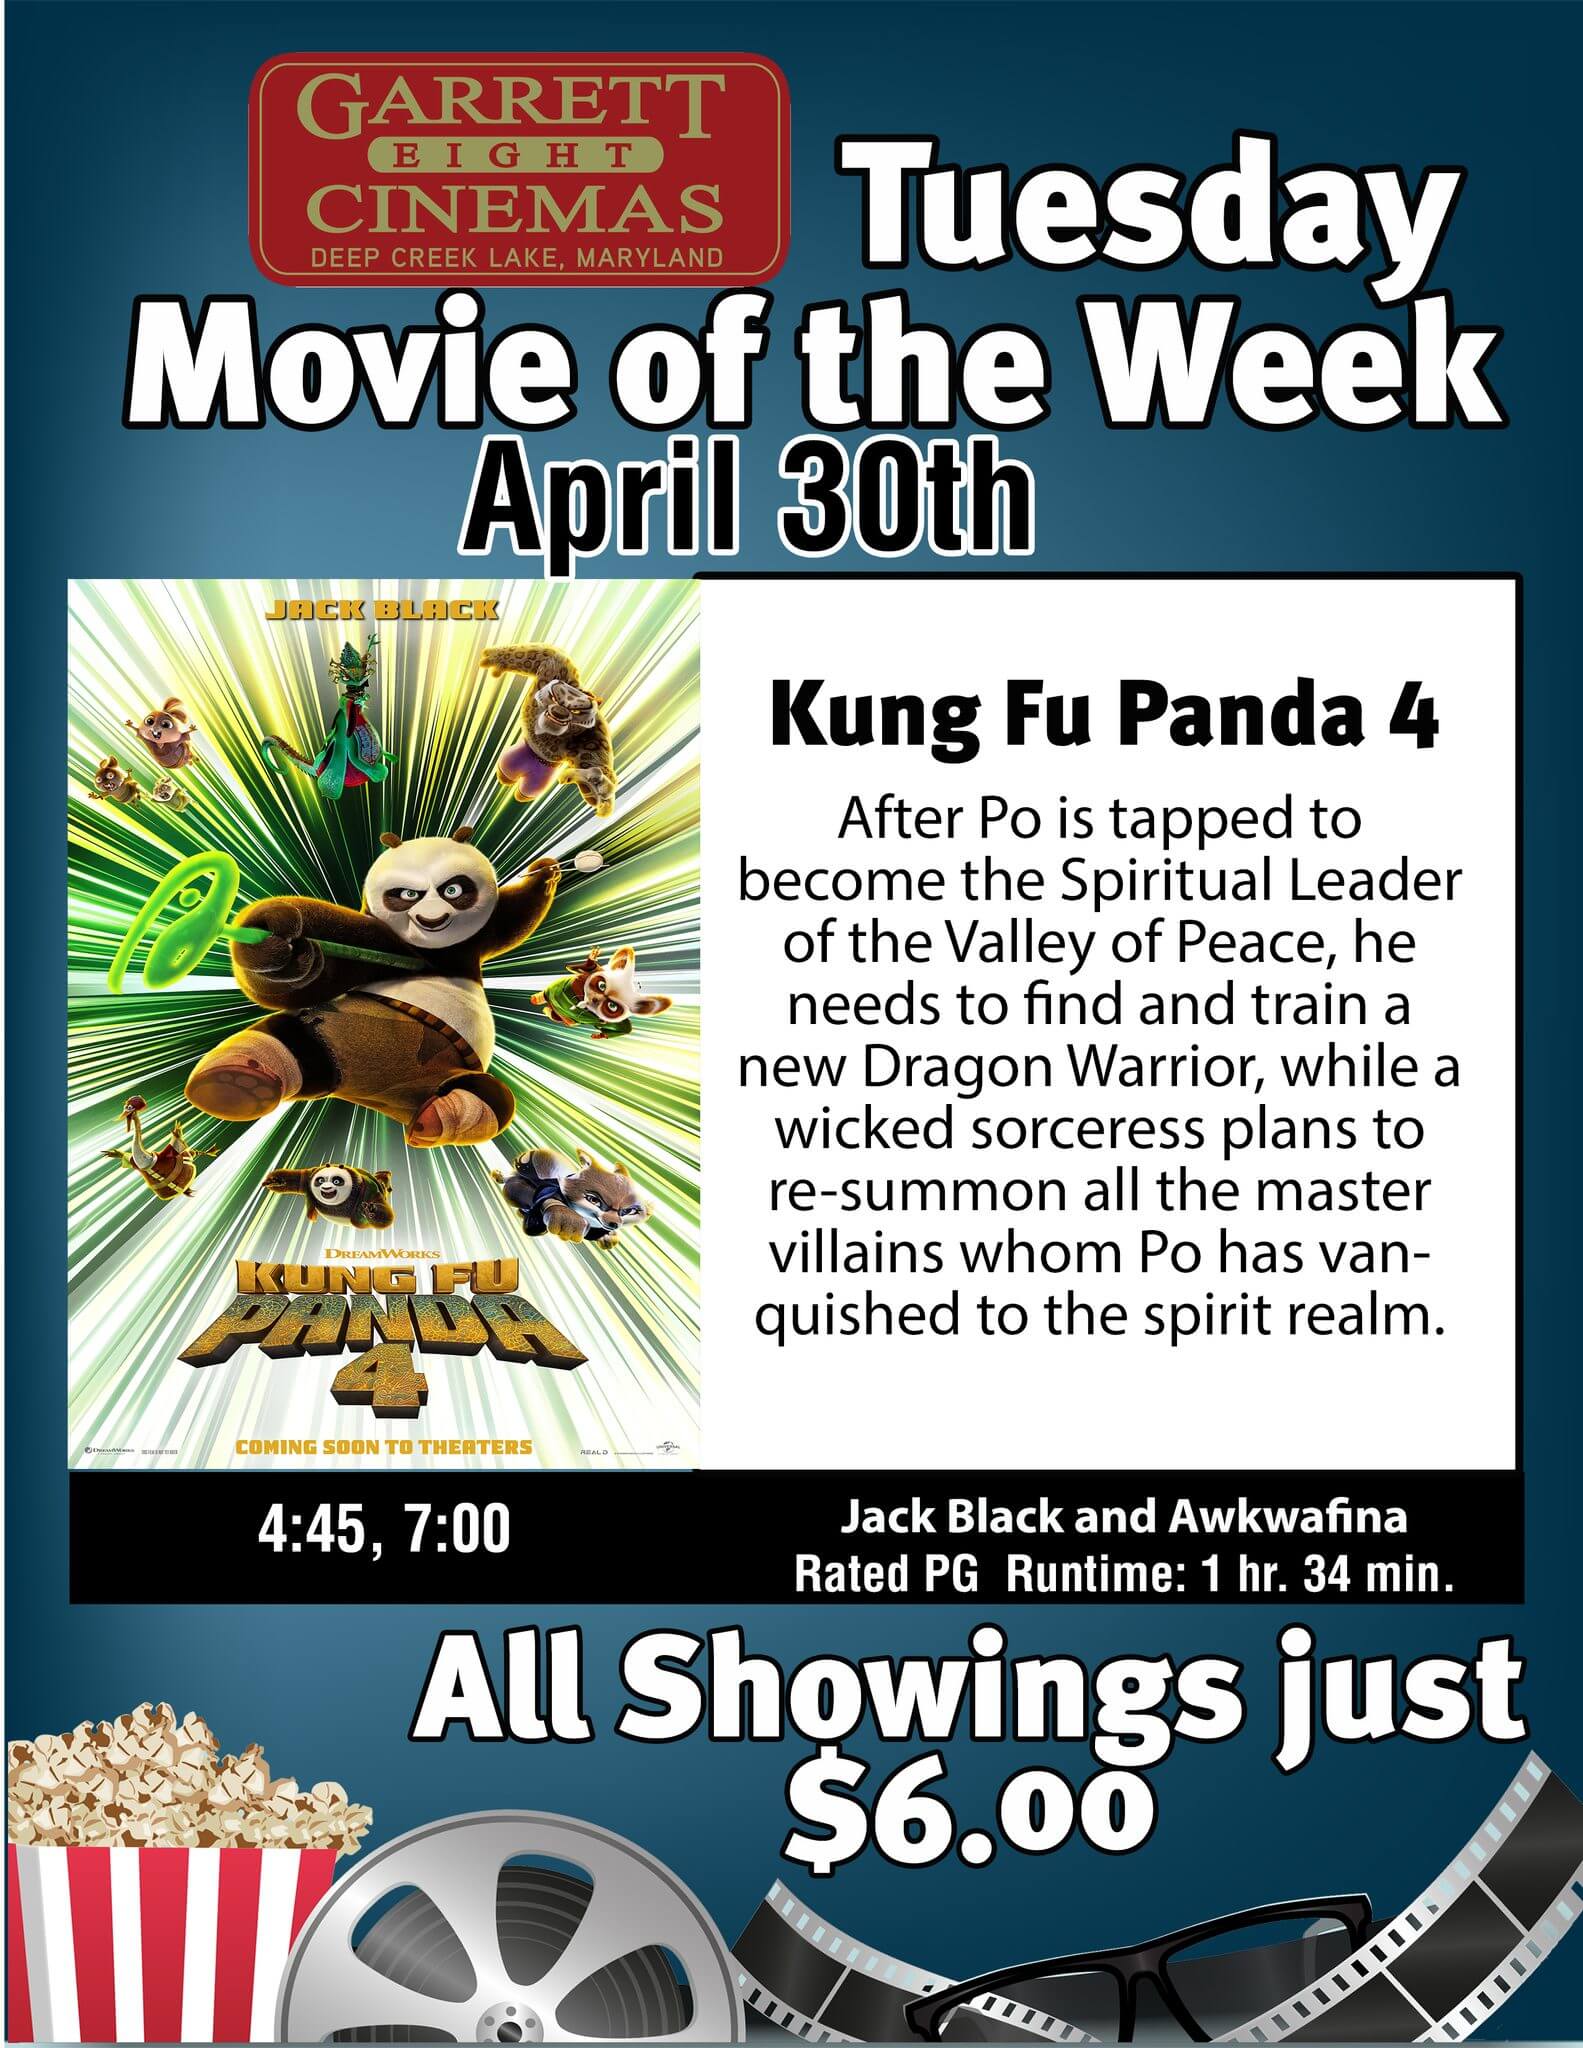 Garrett 8 Cinemas' Tuesday Movie of the Week- Kung Fu Panda 4 at Deep Creek Lake, MD